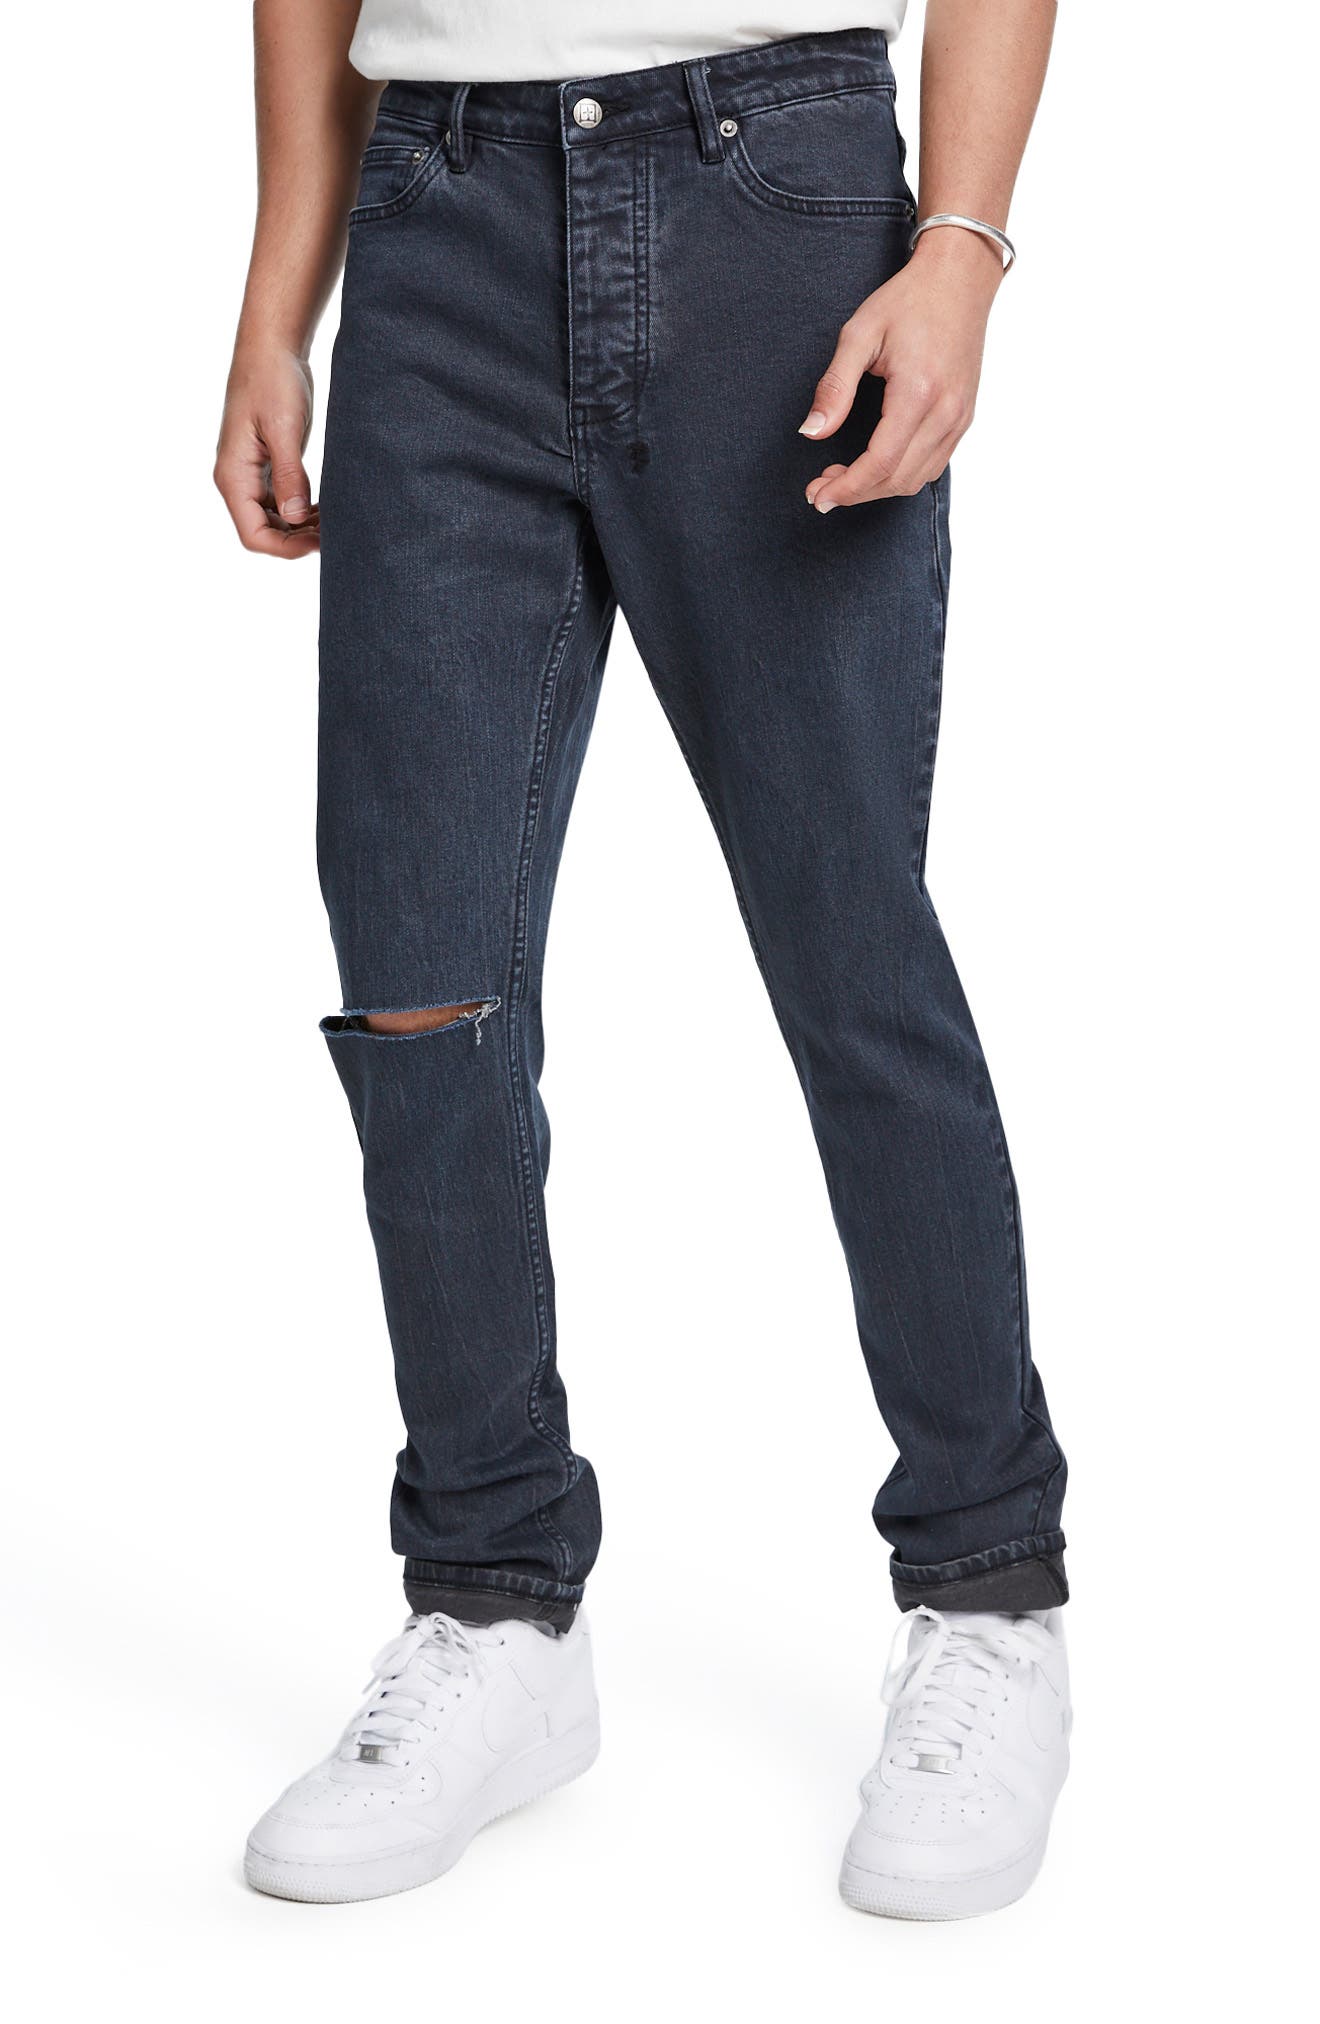 Ksubi Chitch Shadow Re-Dye Slash Skinny Jeans in Denim at Nordstrom, Size 29